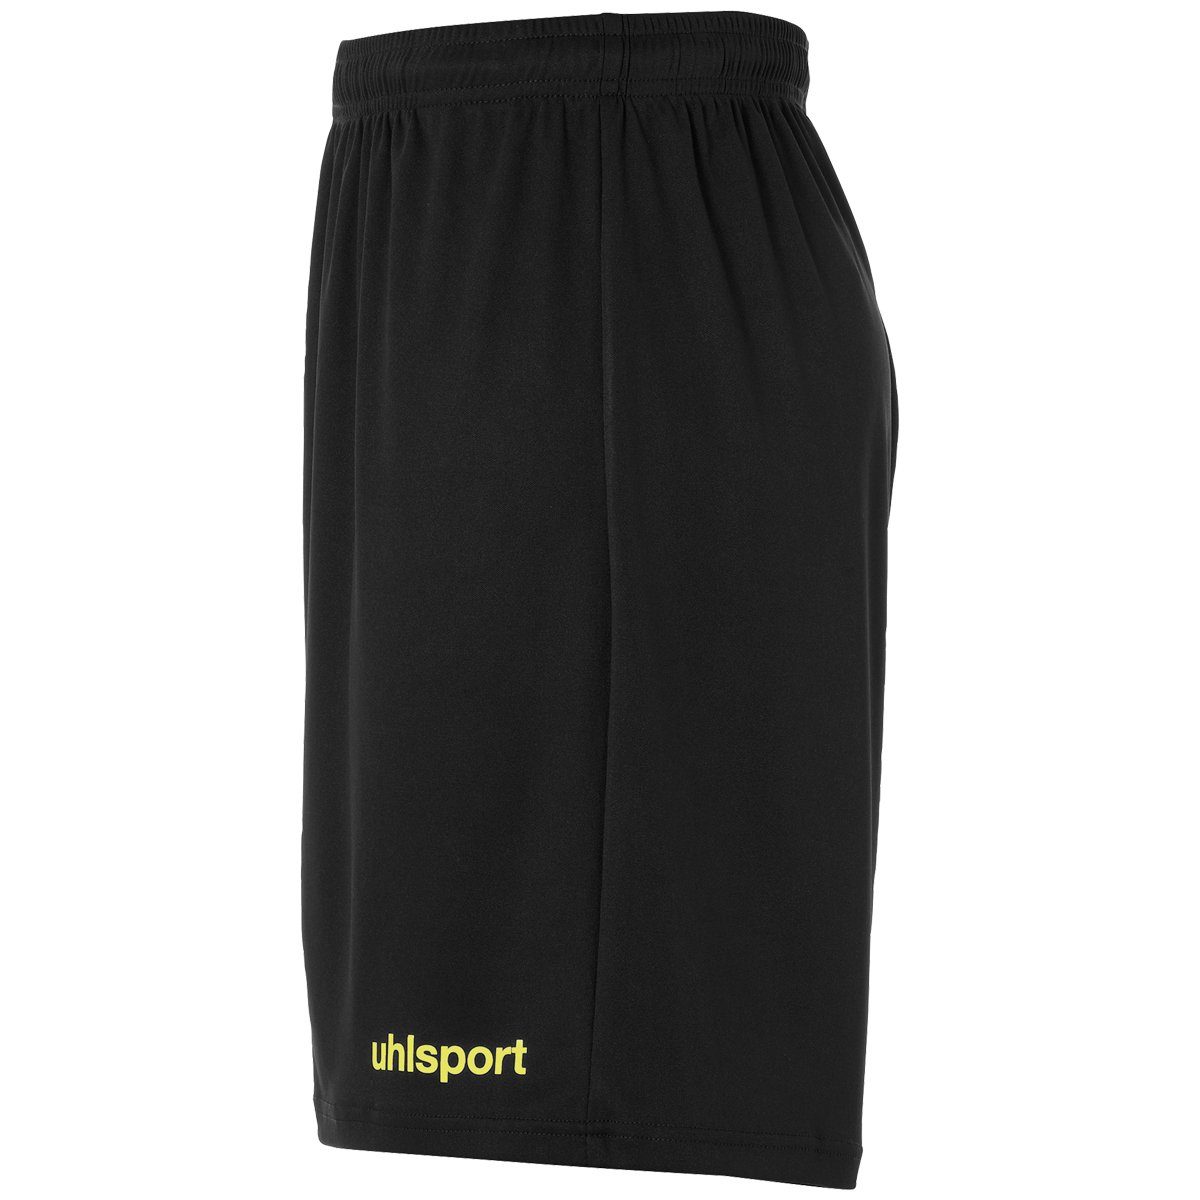 uhlsport Shorts uhlsport schwarz/fluo gelb Shorts